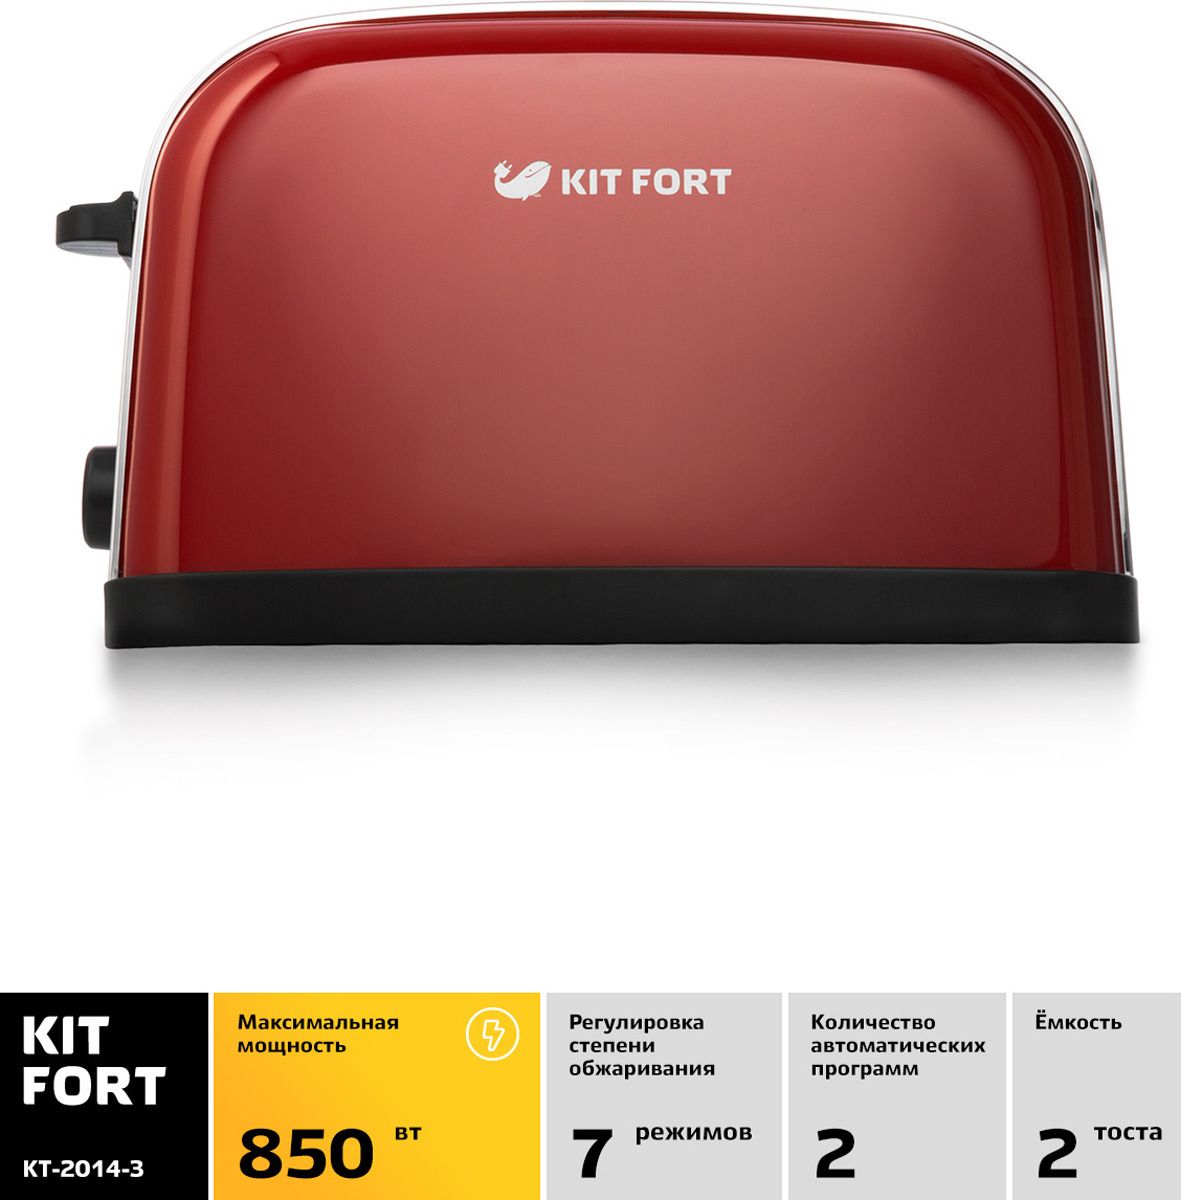  Kitfort -2014-3, : 